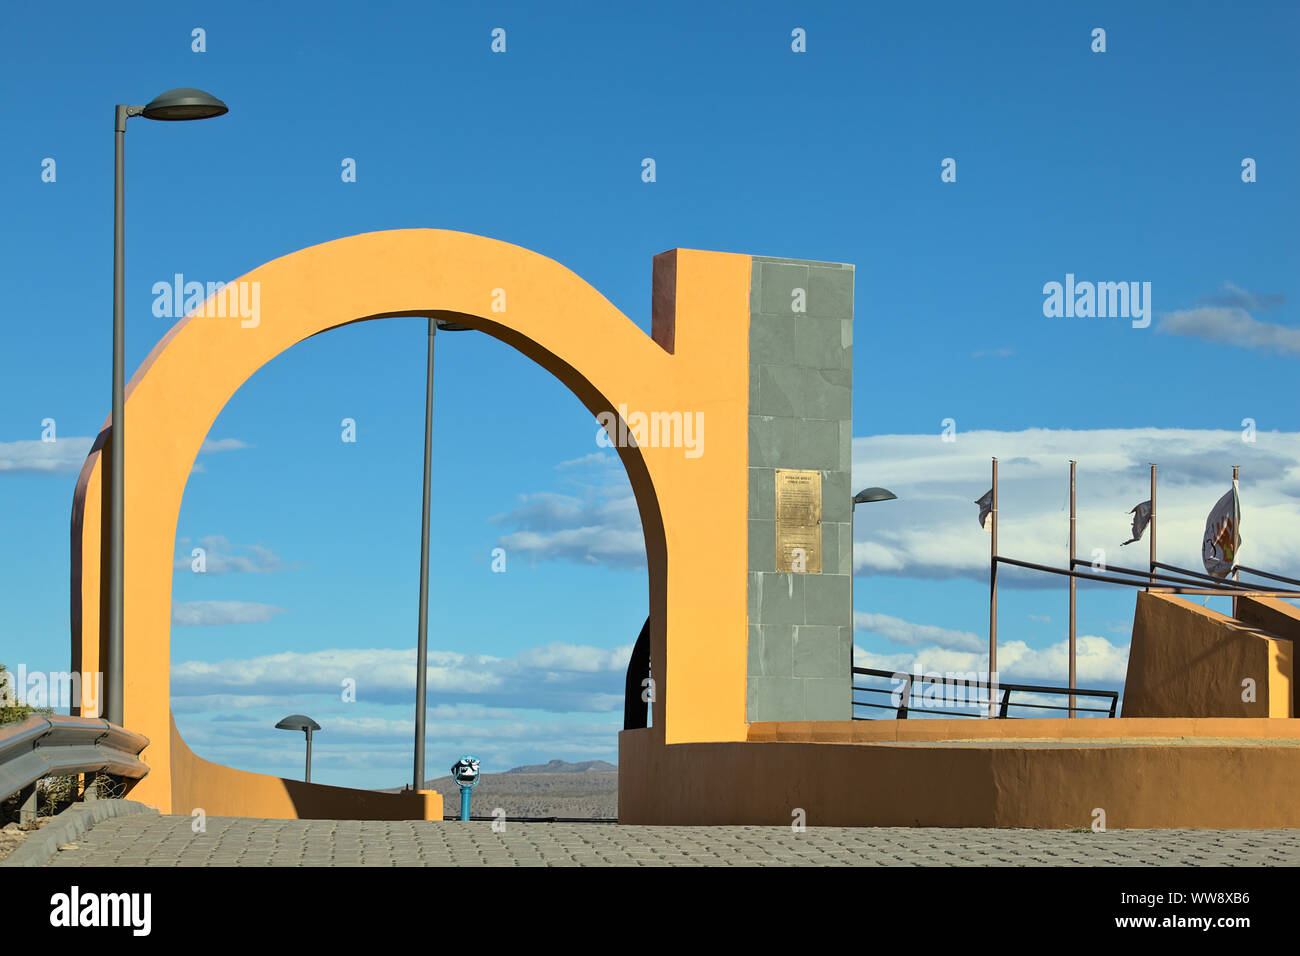 CHILE CHICO, CHILE - 23. FEBRUAR 2016: Arch an der Plaza del Viento (Platz des Windes) szenische Sicht in Chile Chico, Chile am 23. Februar 2016 Stockfoto